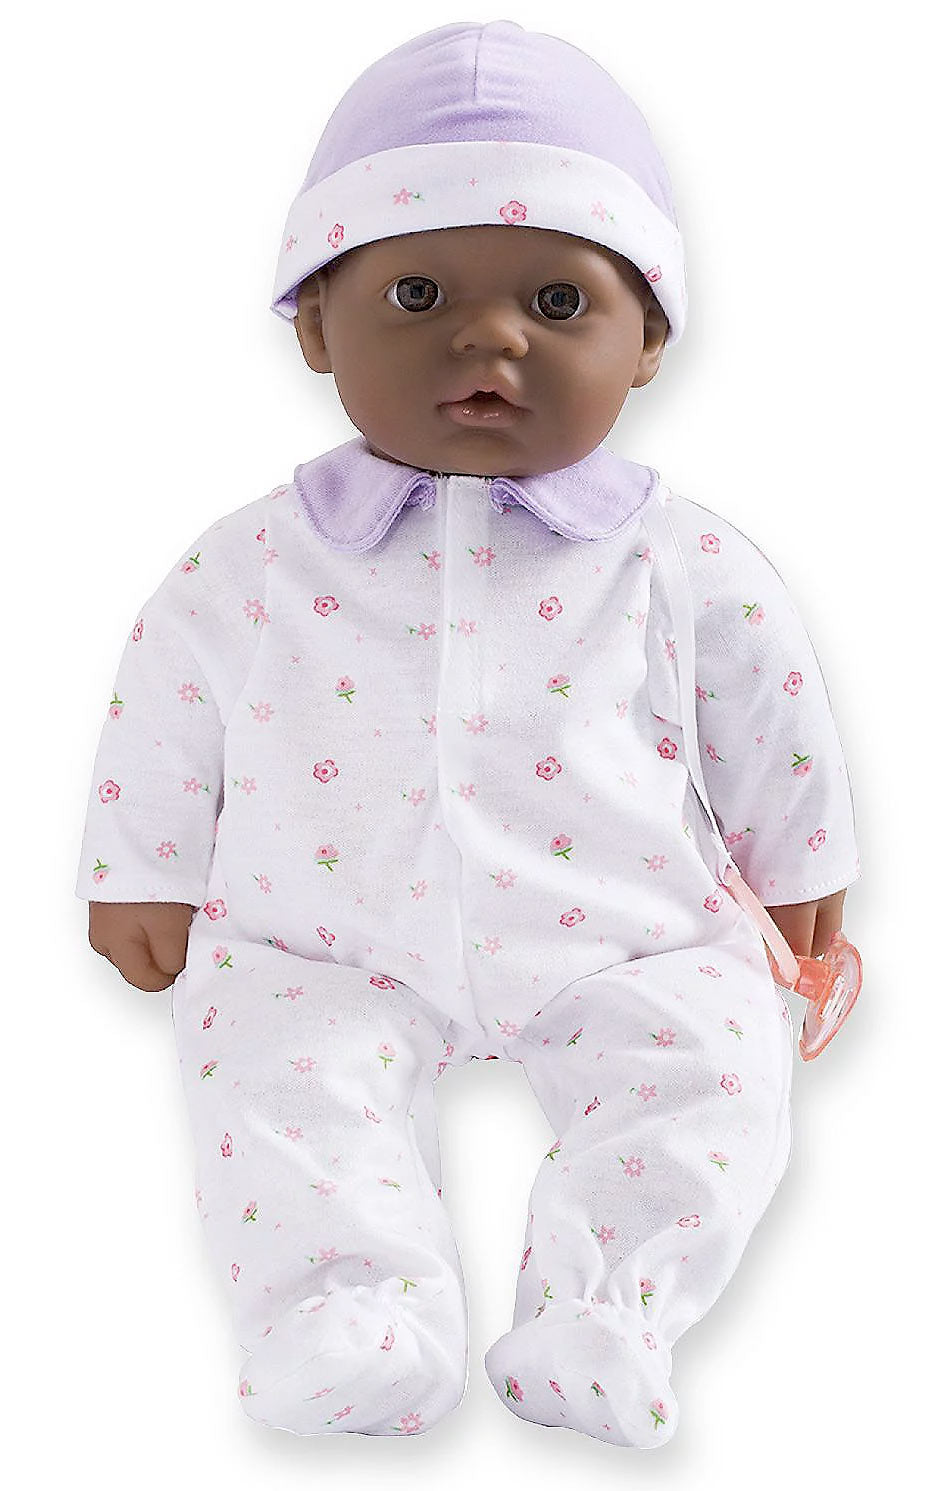 La Baby 16" African American Soft Body Baby Doll